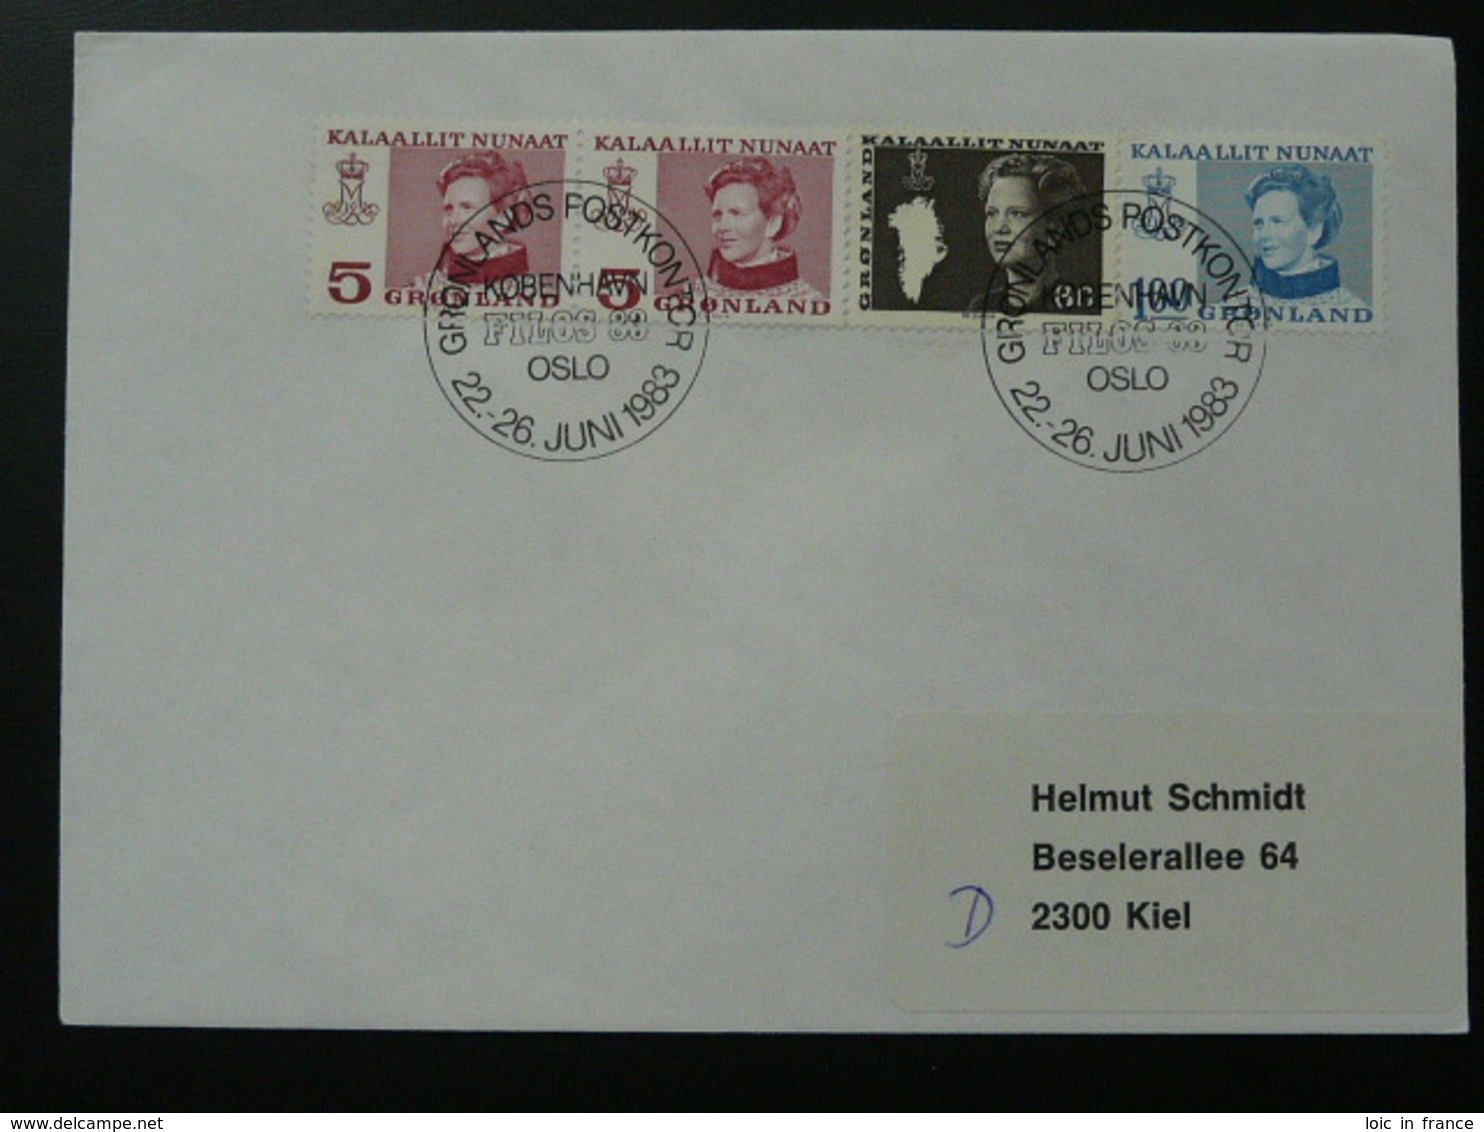 Slania Stamps Postmark On Cover Oslo Filos 1988 Greenland 69886 - Poststempel